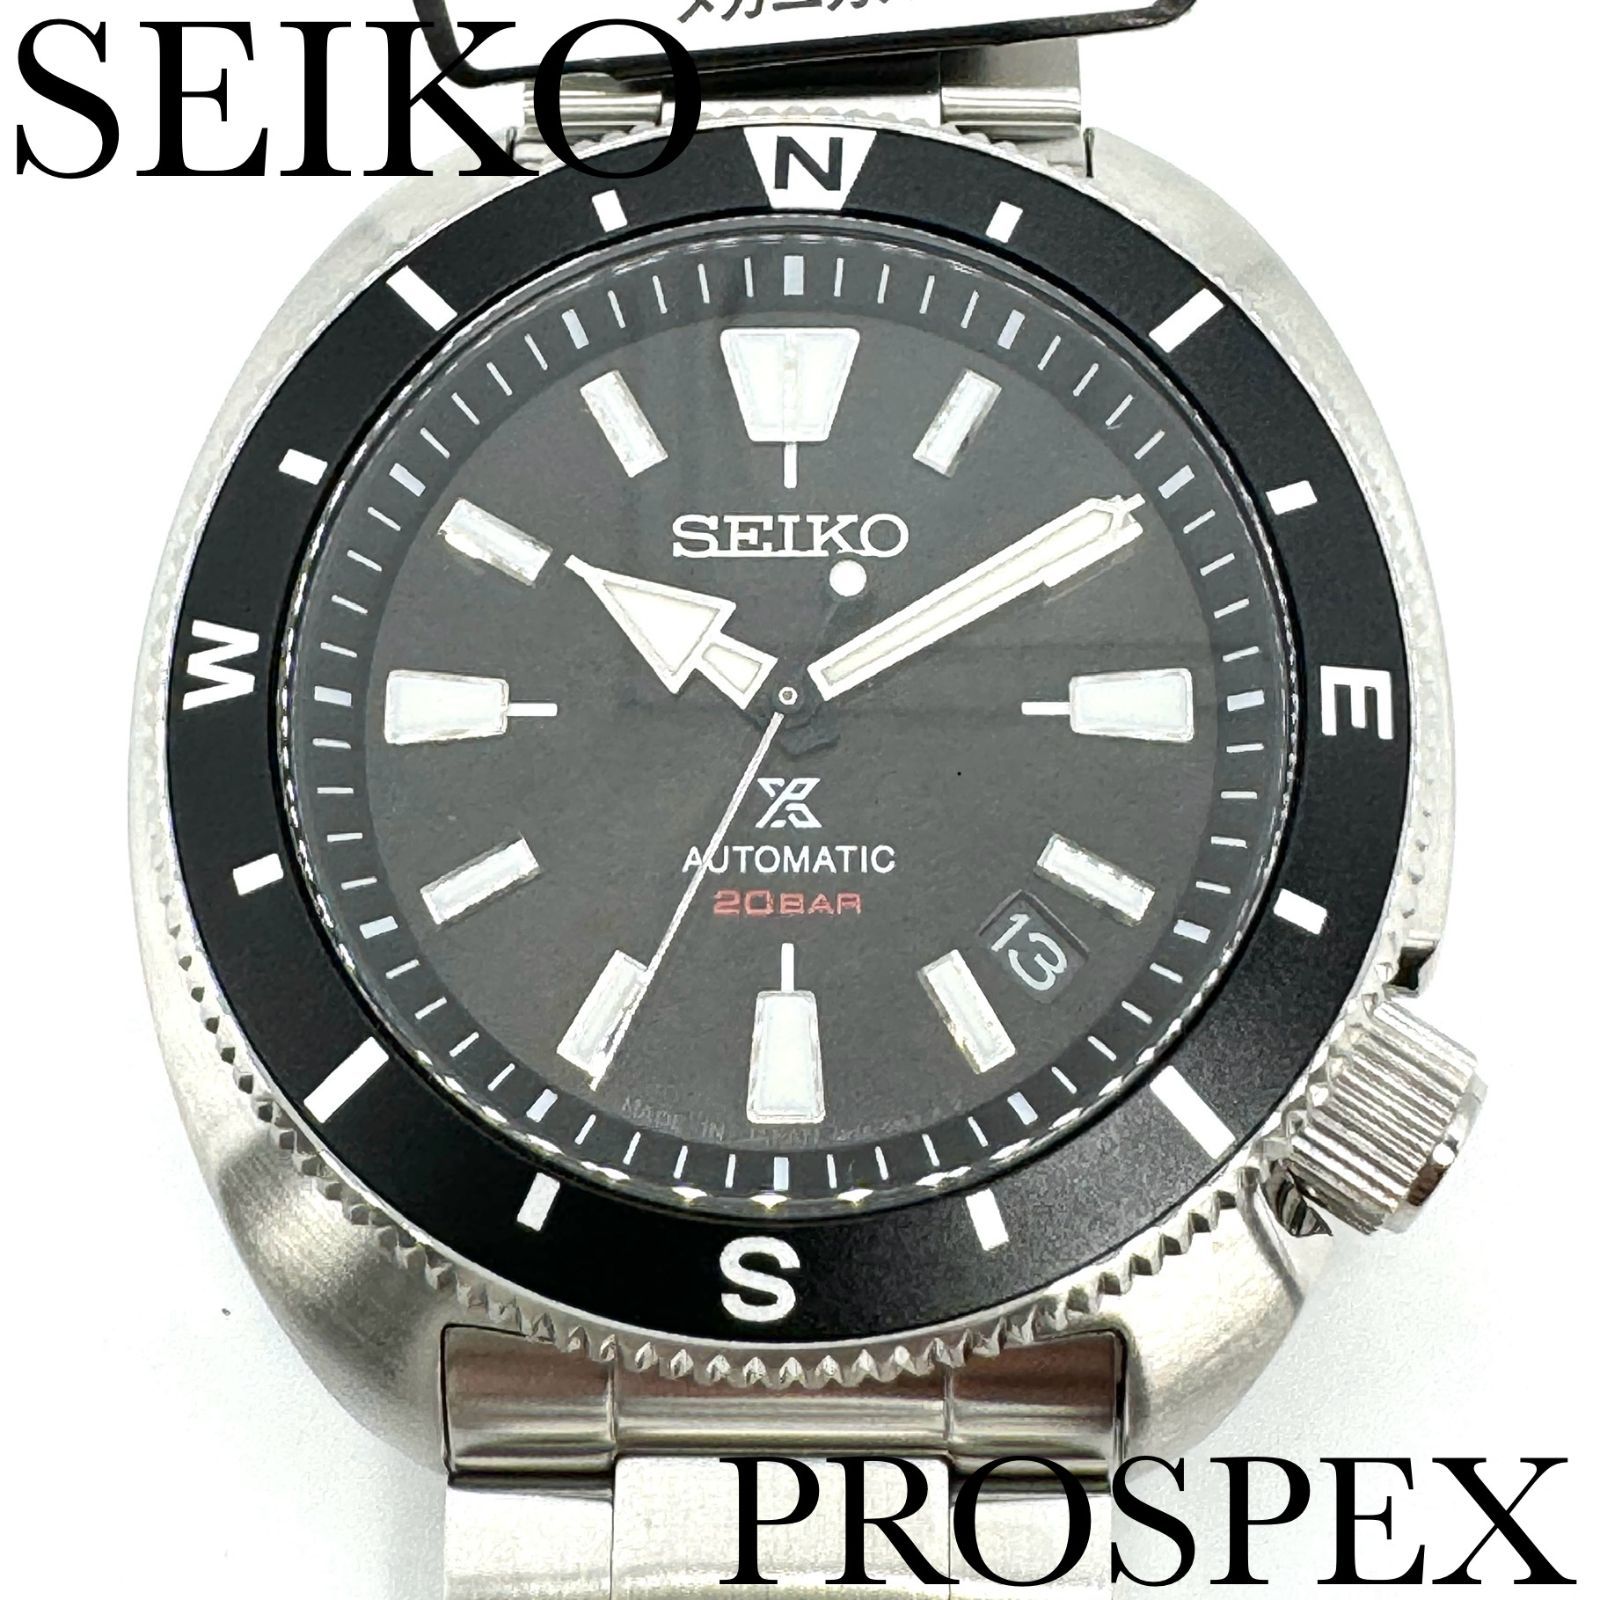 SEIKOプロスペックス SBDY113 フィールドマスター 新品 国内正規品PROSPEX